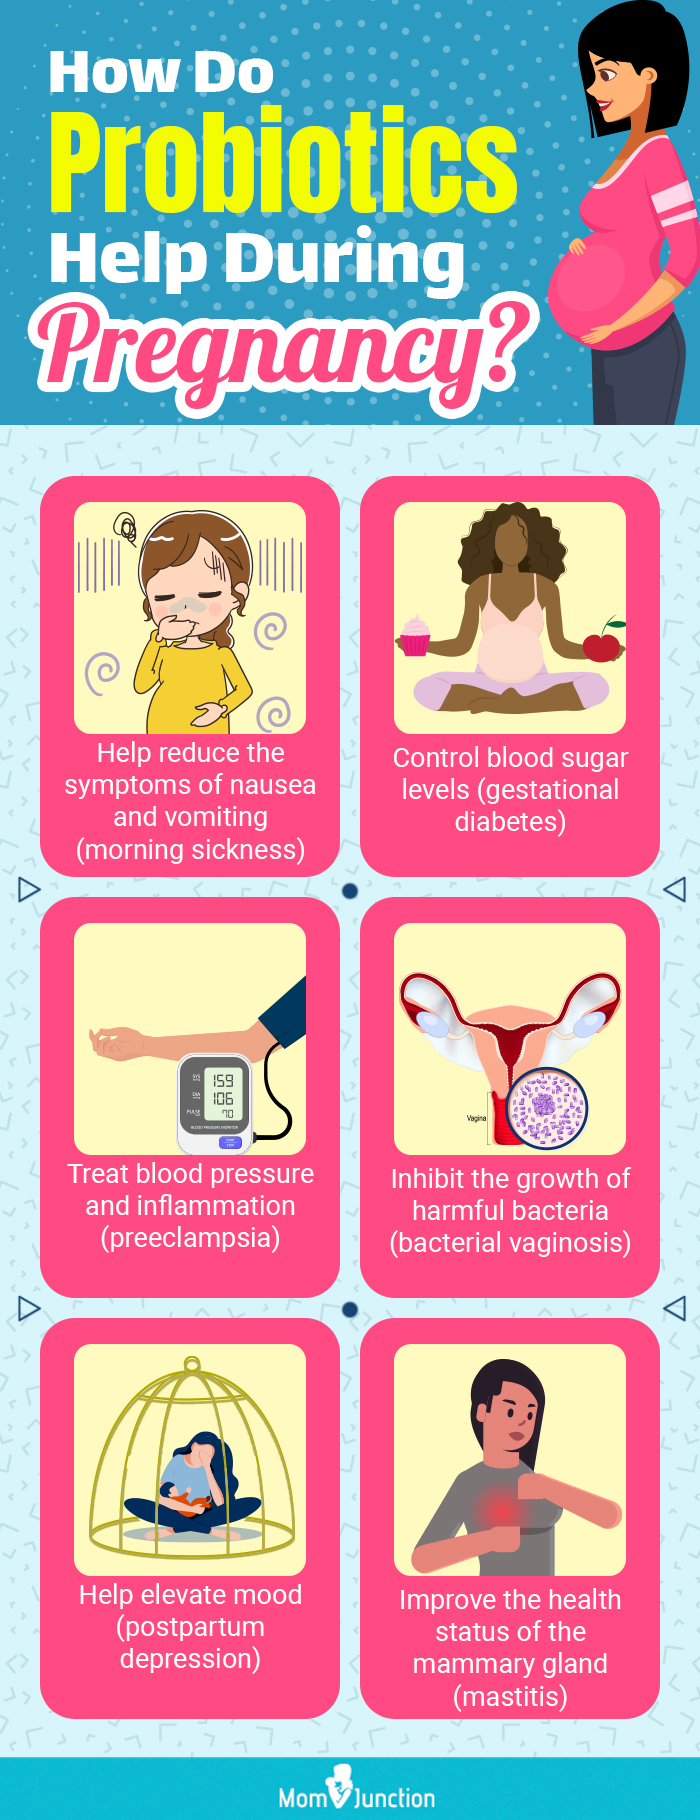 how do probiotics help during pregnancy (infographic)